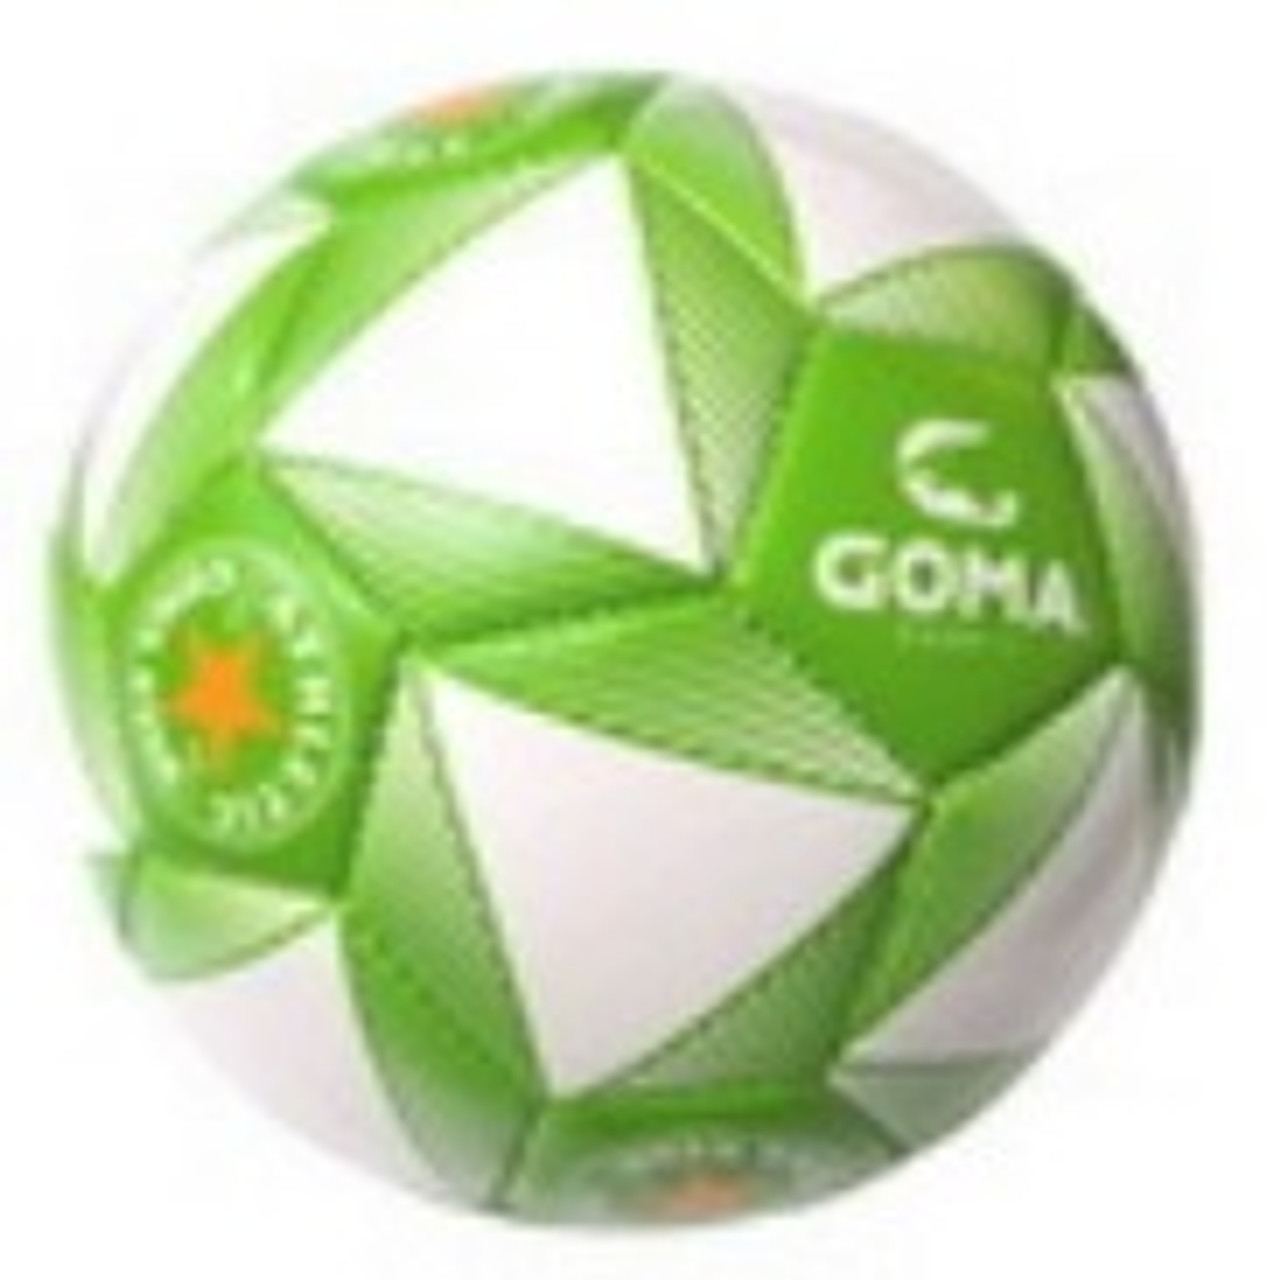 GOMA STAR FOOTBALL SIZE 2